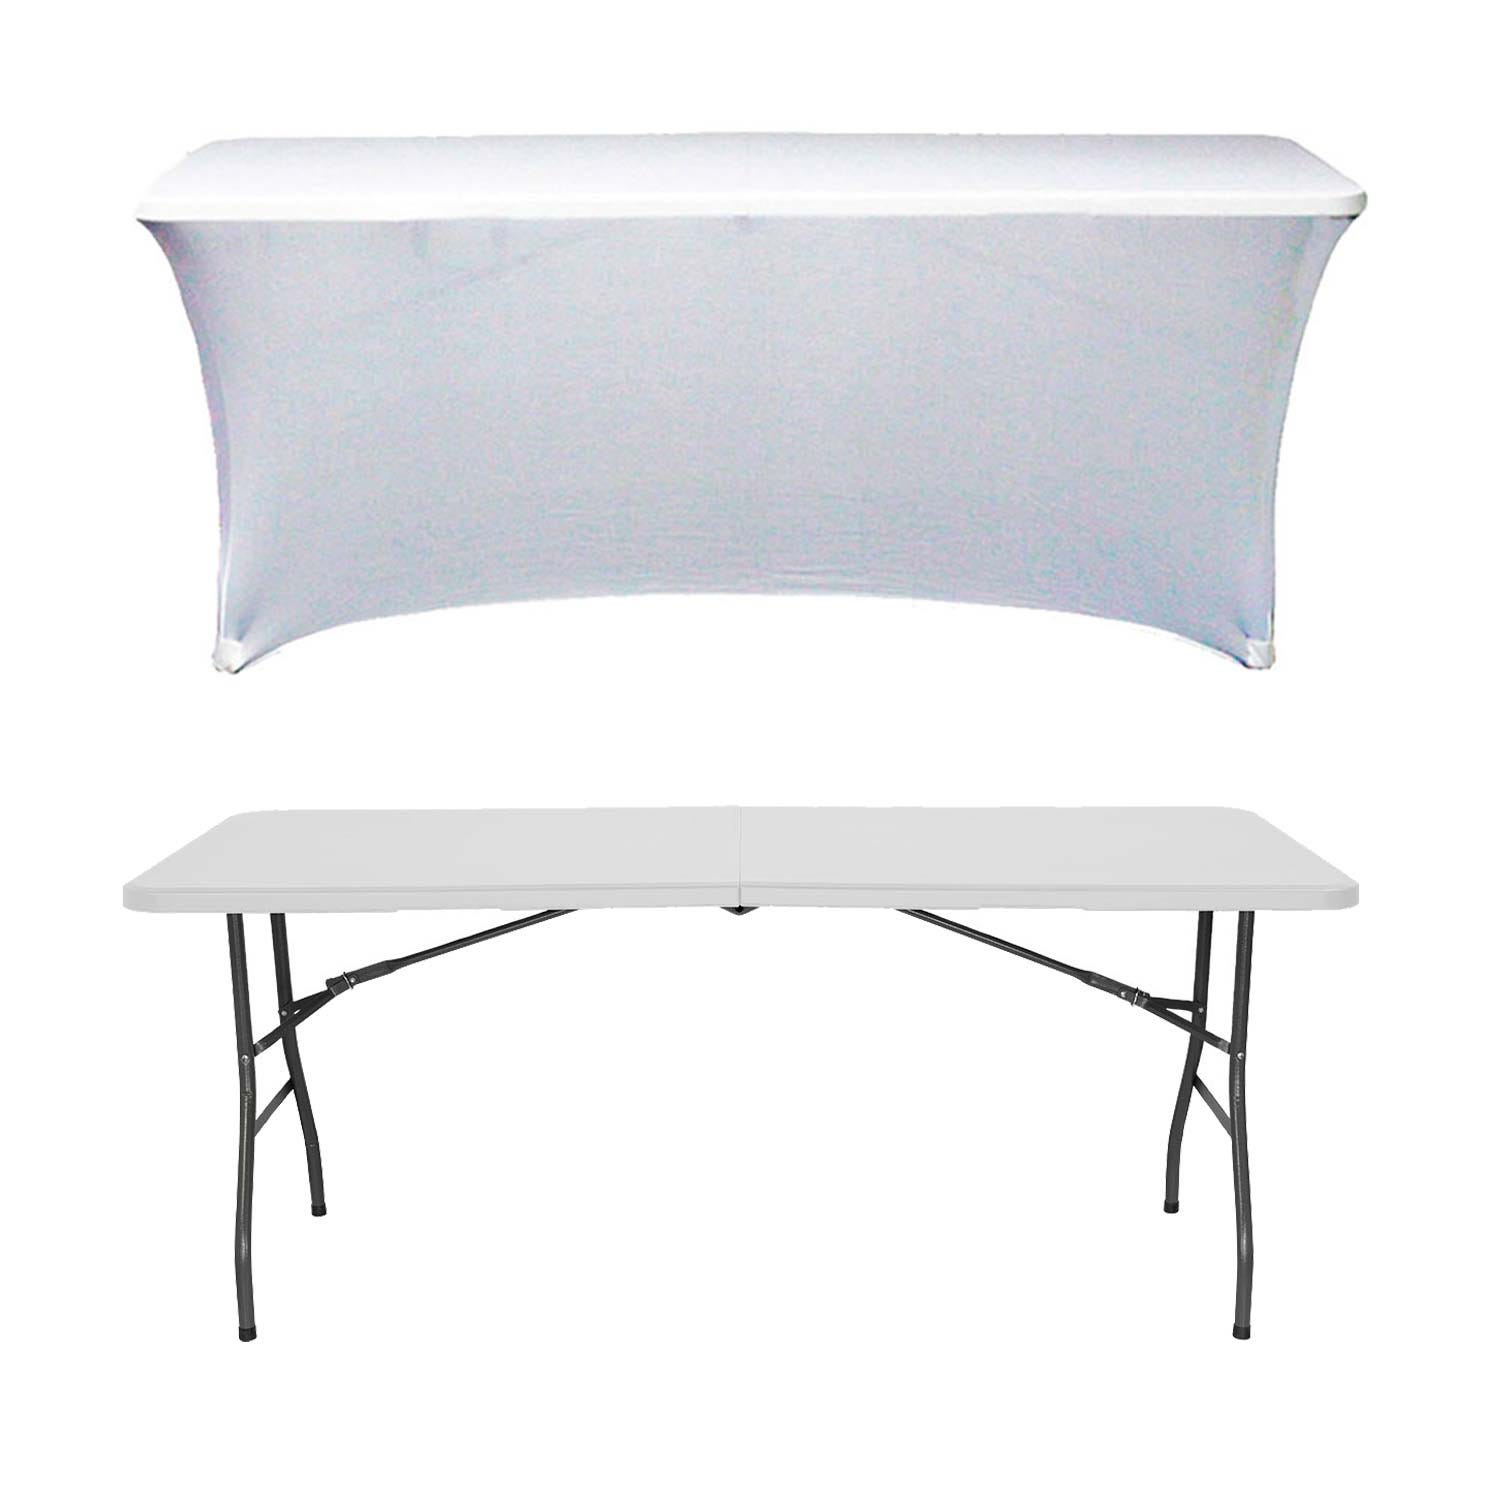 Mesa plegable 180 cm blanca